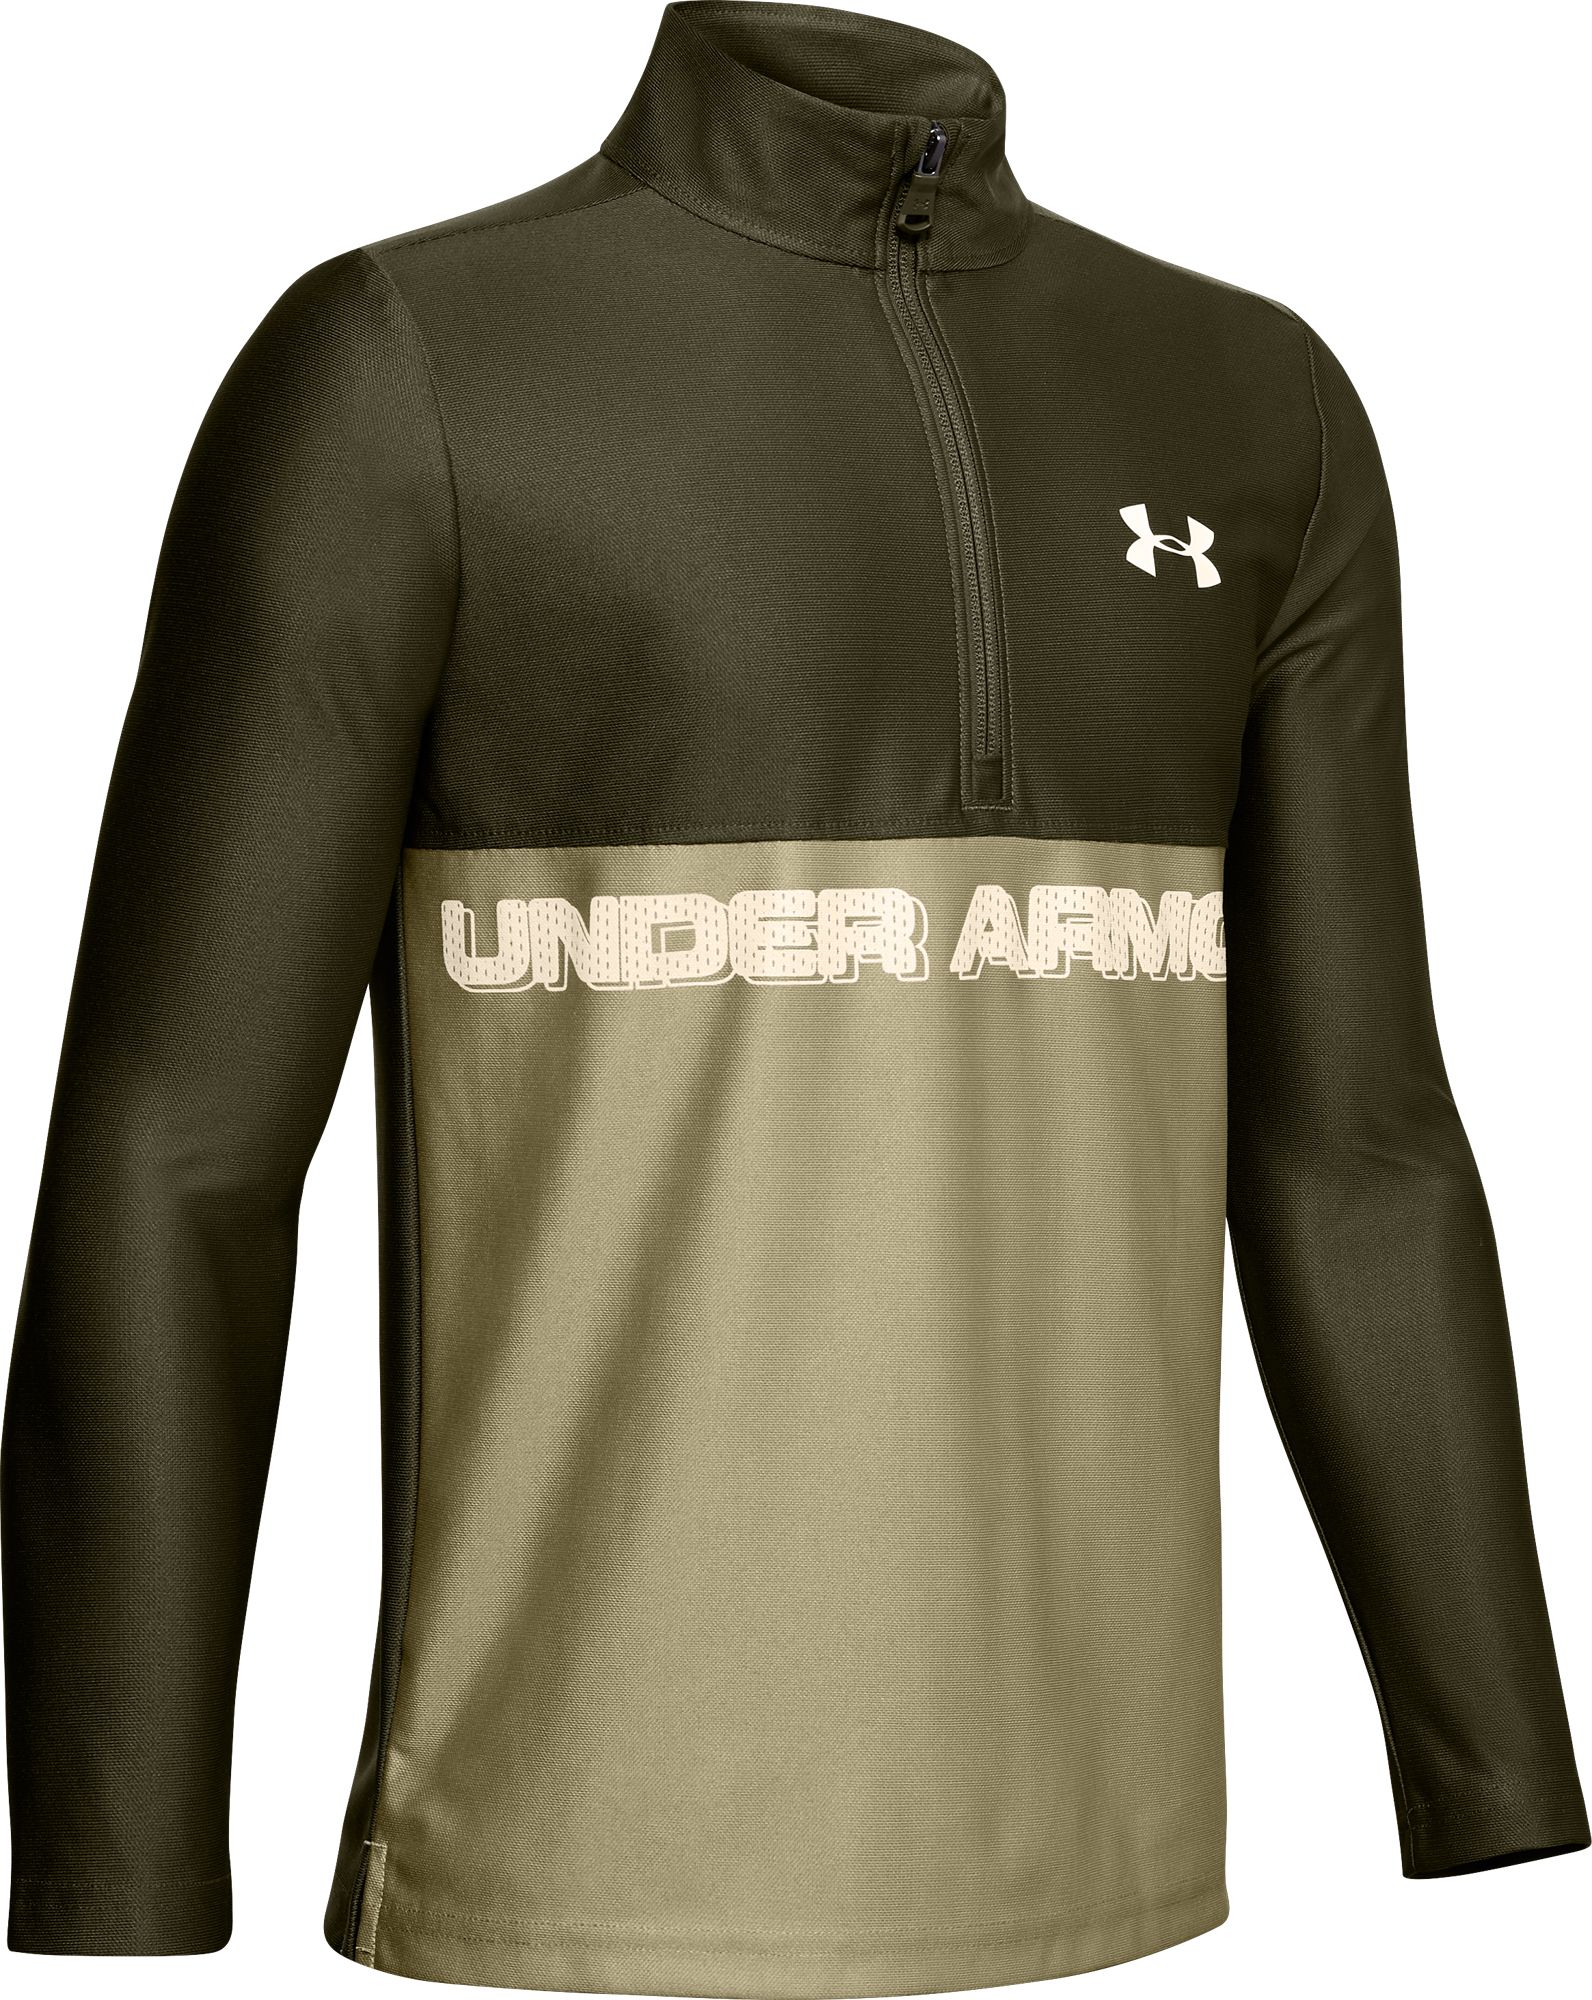 brown under armour long sleeve shirt